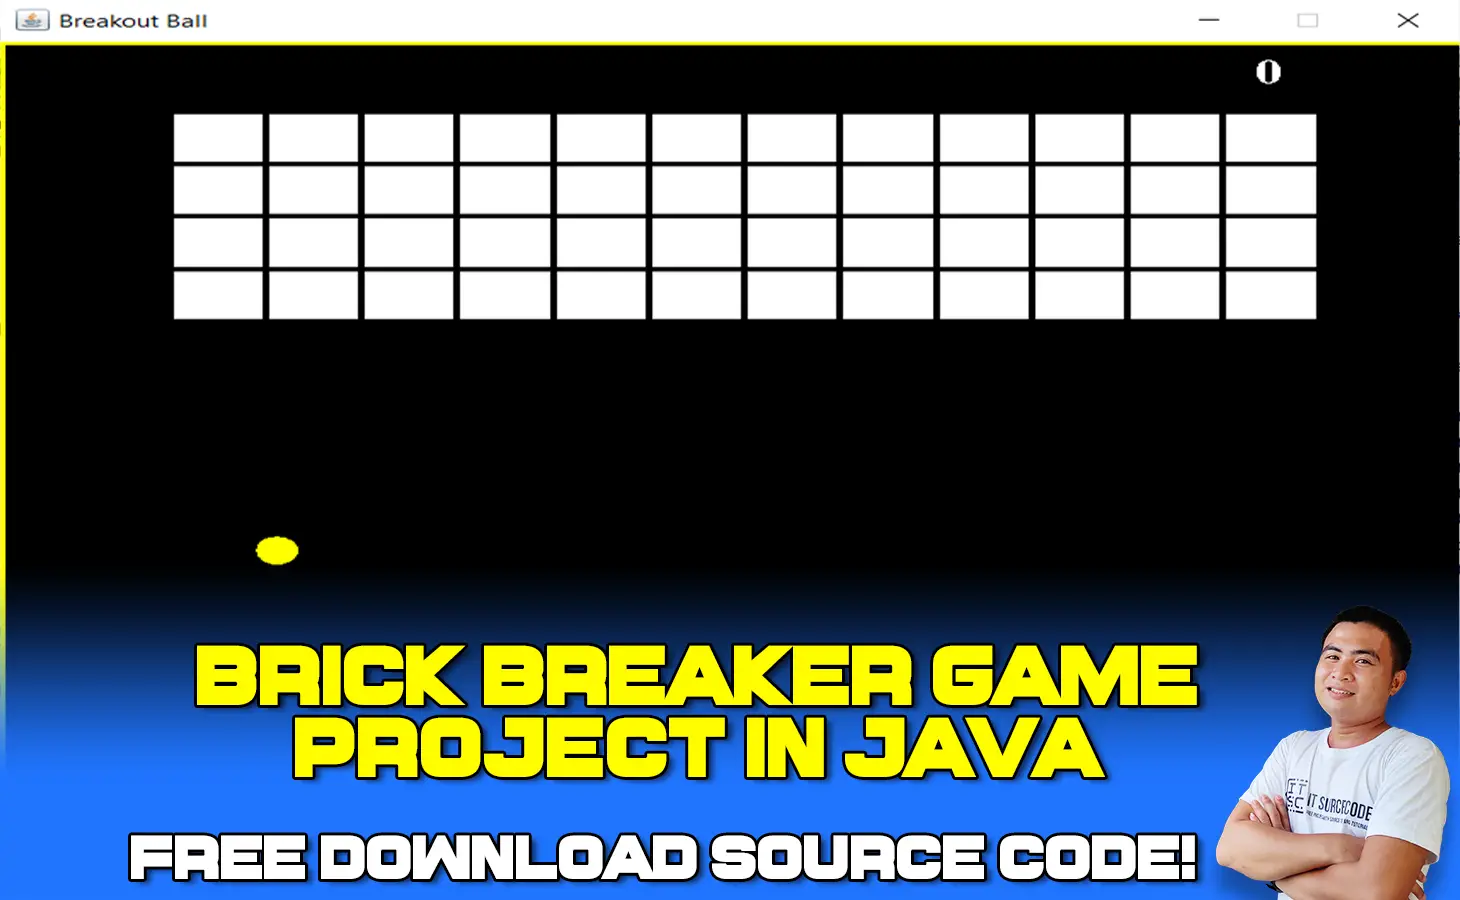 Brick Breaker Game in Java with Source Code 2022 - FREE DOWNLOAD